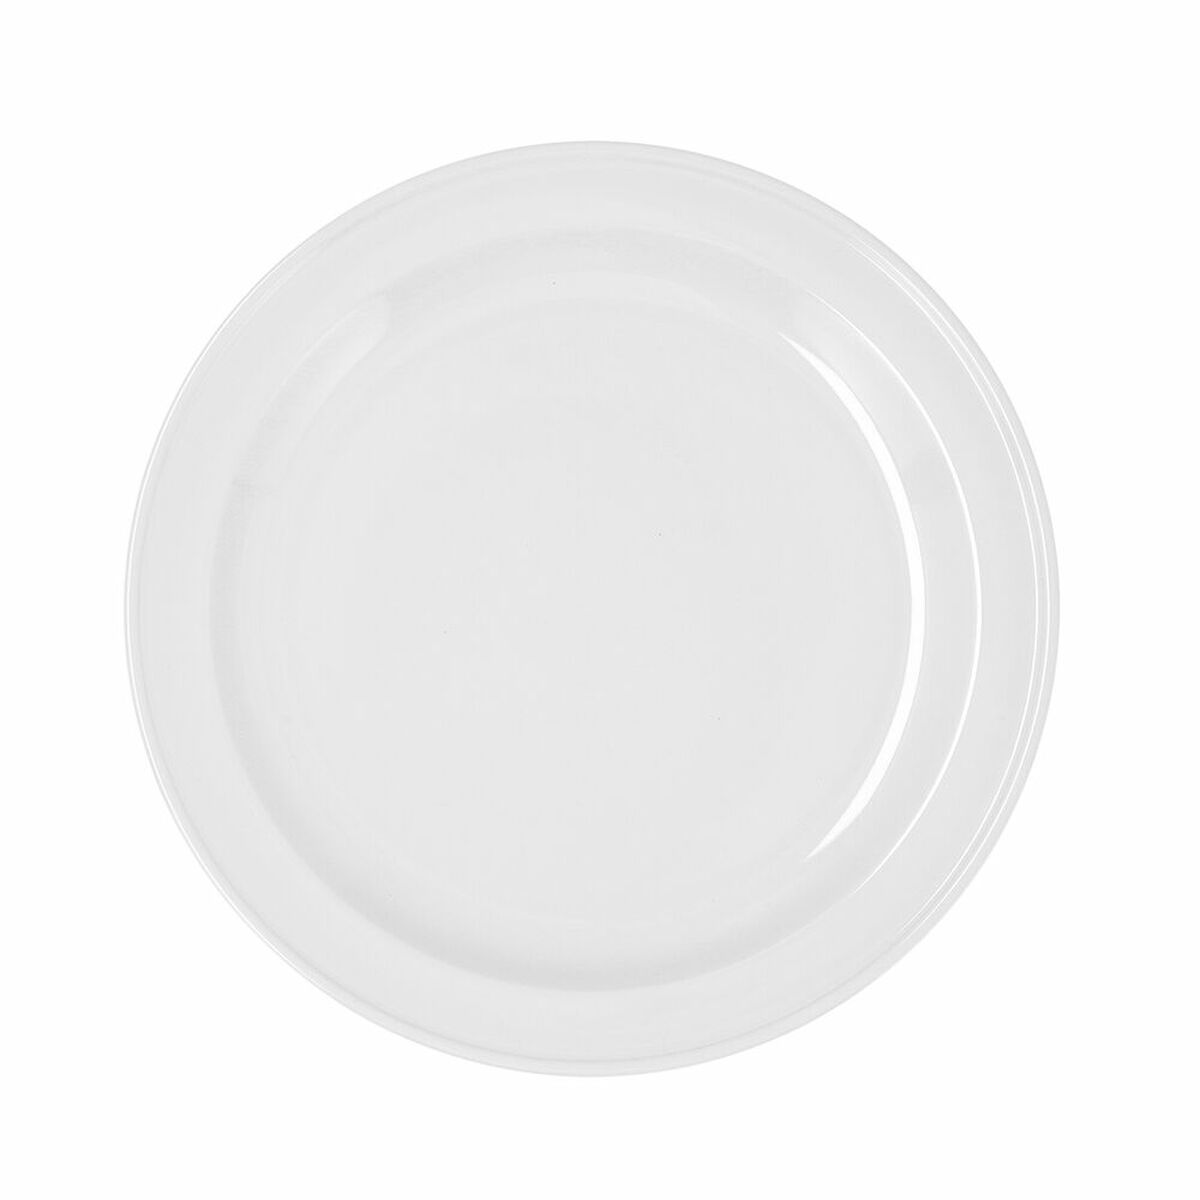 Piatto da pranzo Bidasoa Glacial Ala Estrch Bianco Ceramica Ø 26 cm 26 cm (4 Unità) (Pack 4x)